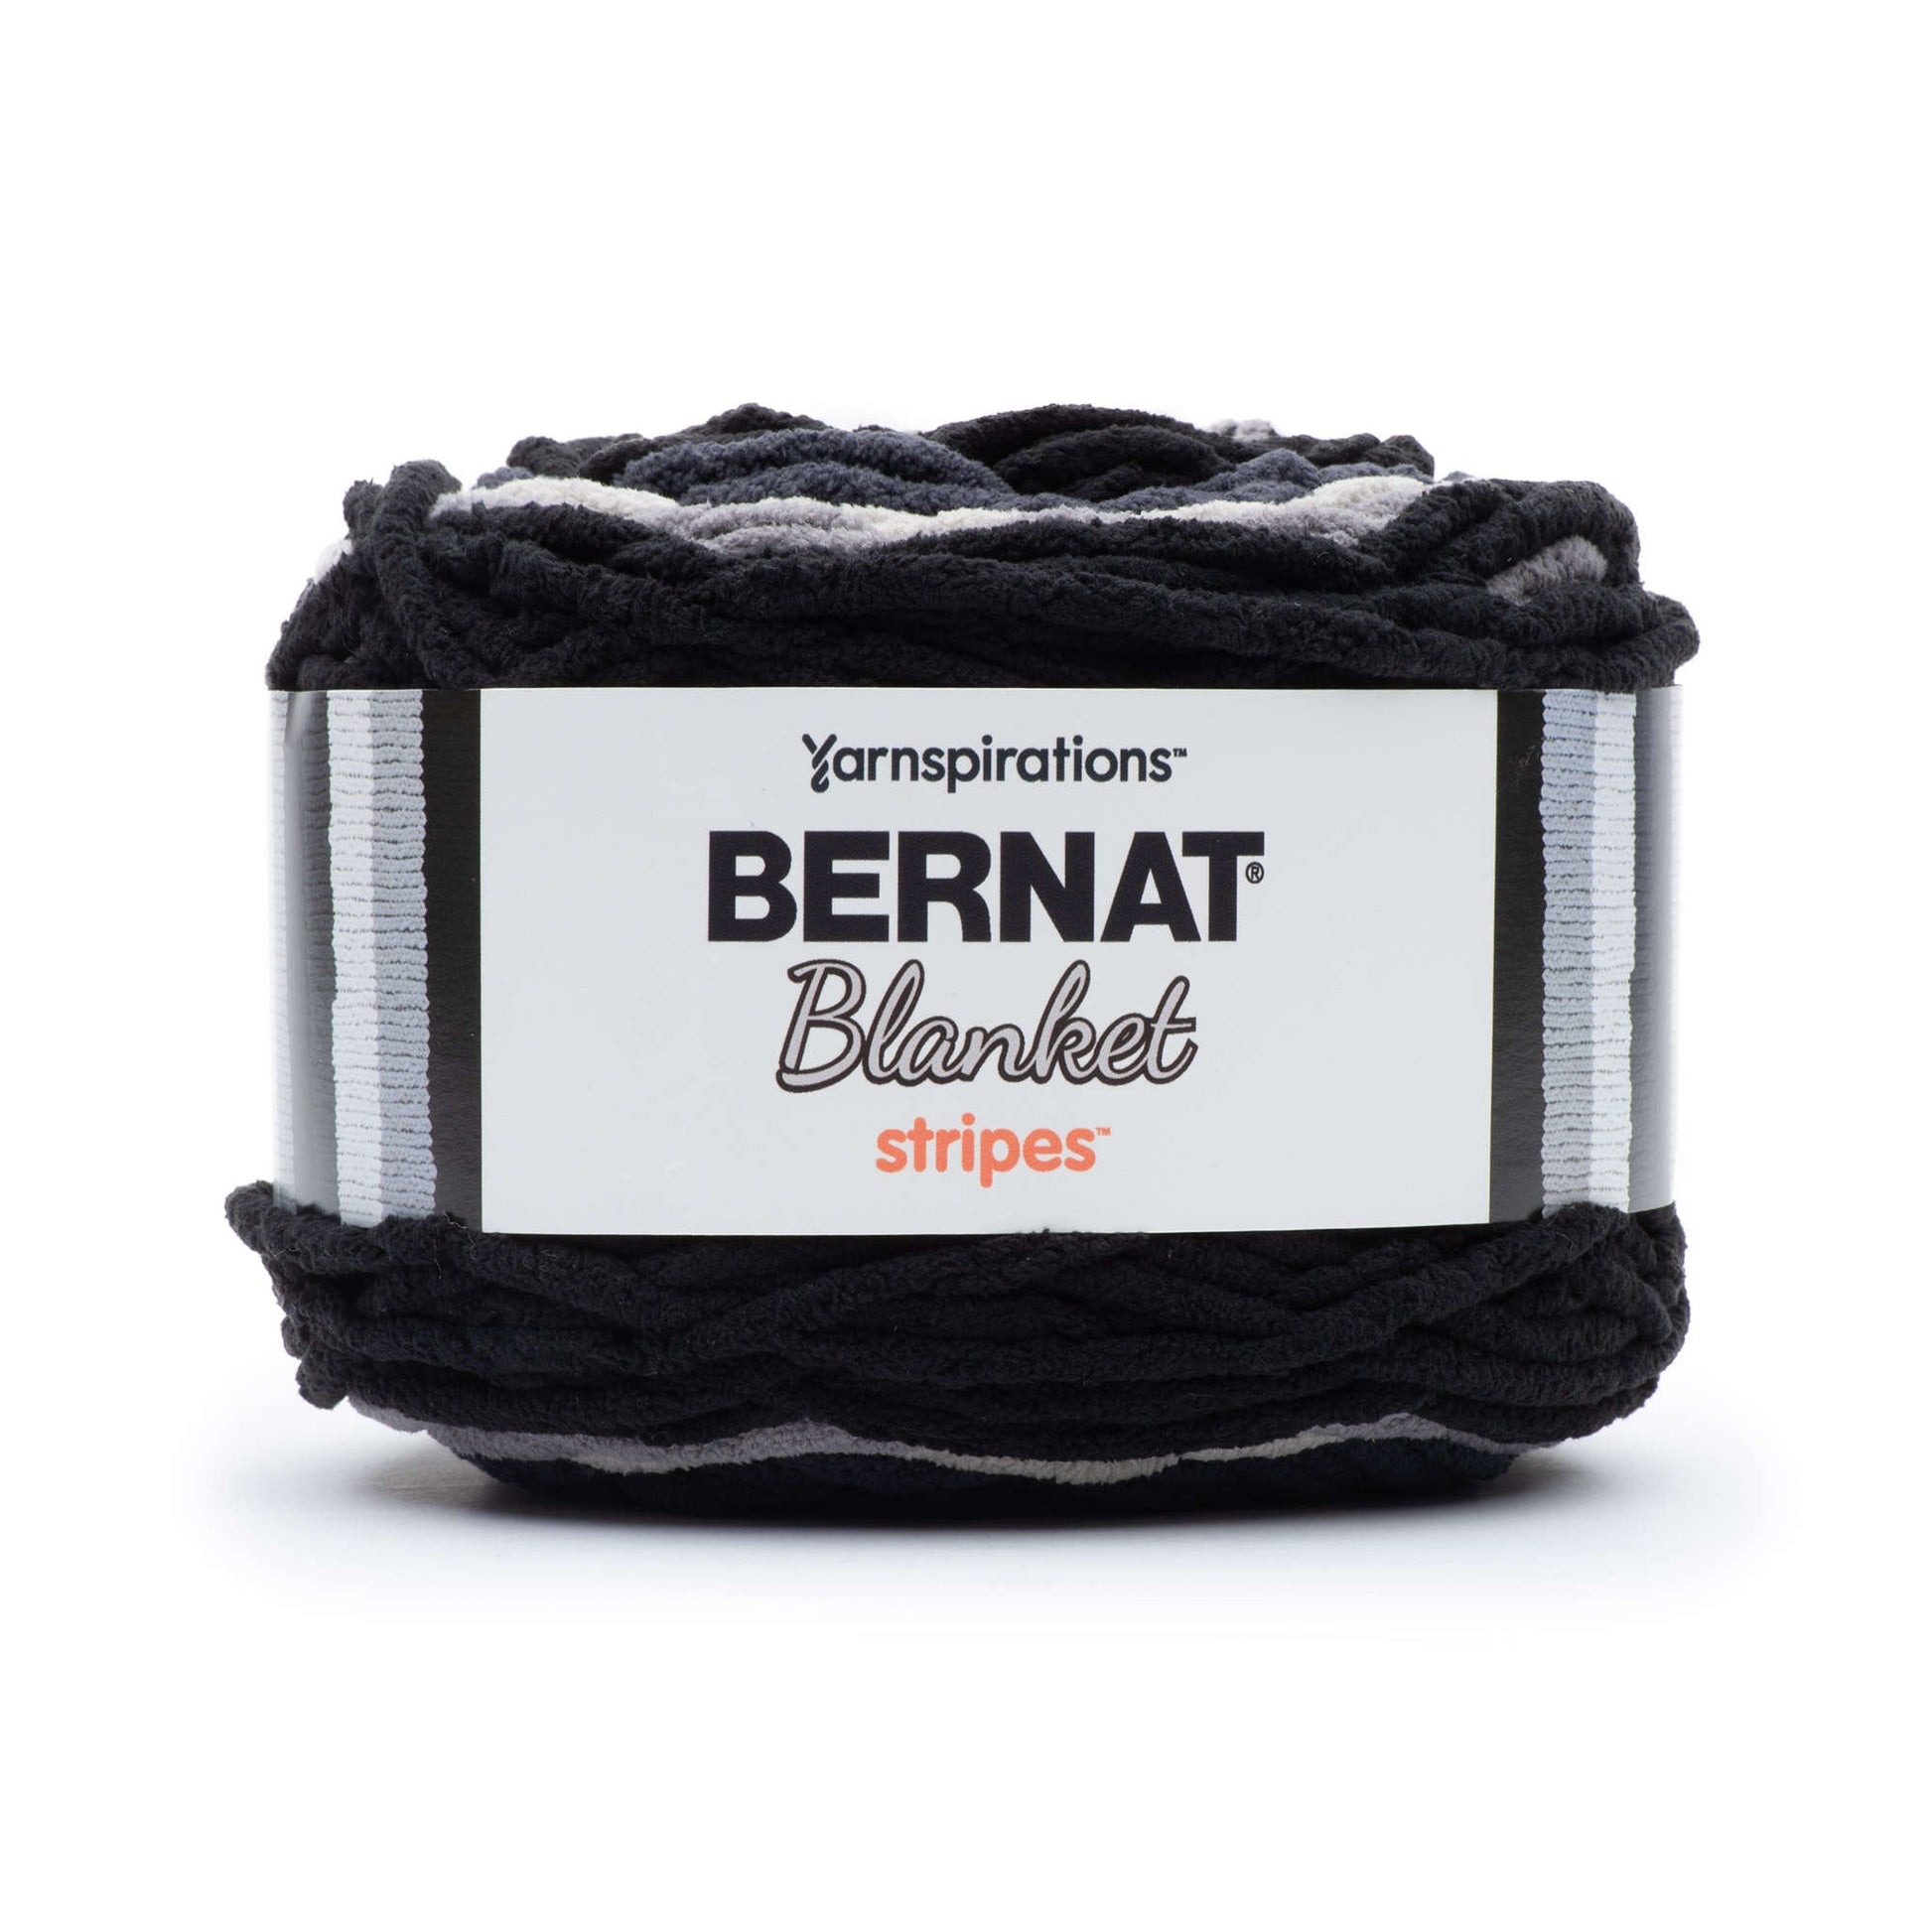 Bernat Blanket Stripes Yarn (300g/10.5oz) - Discontinued Shades Graphite